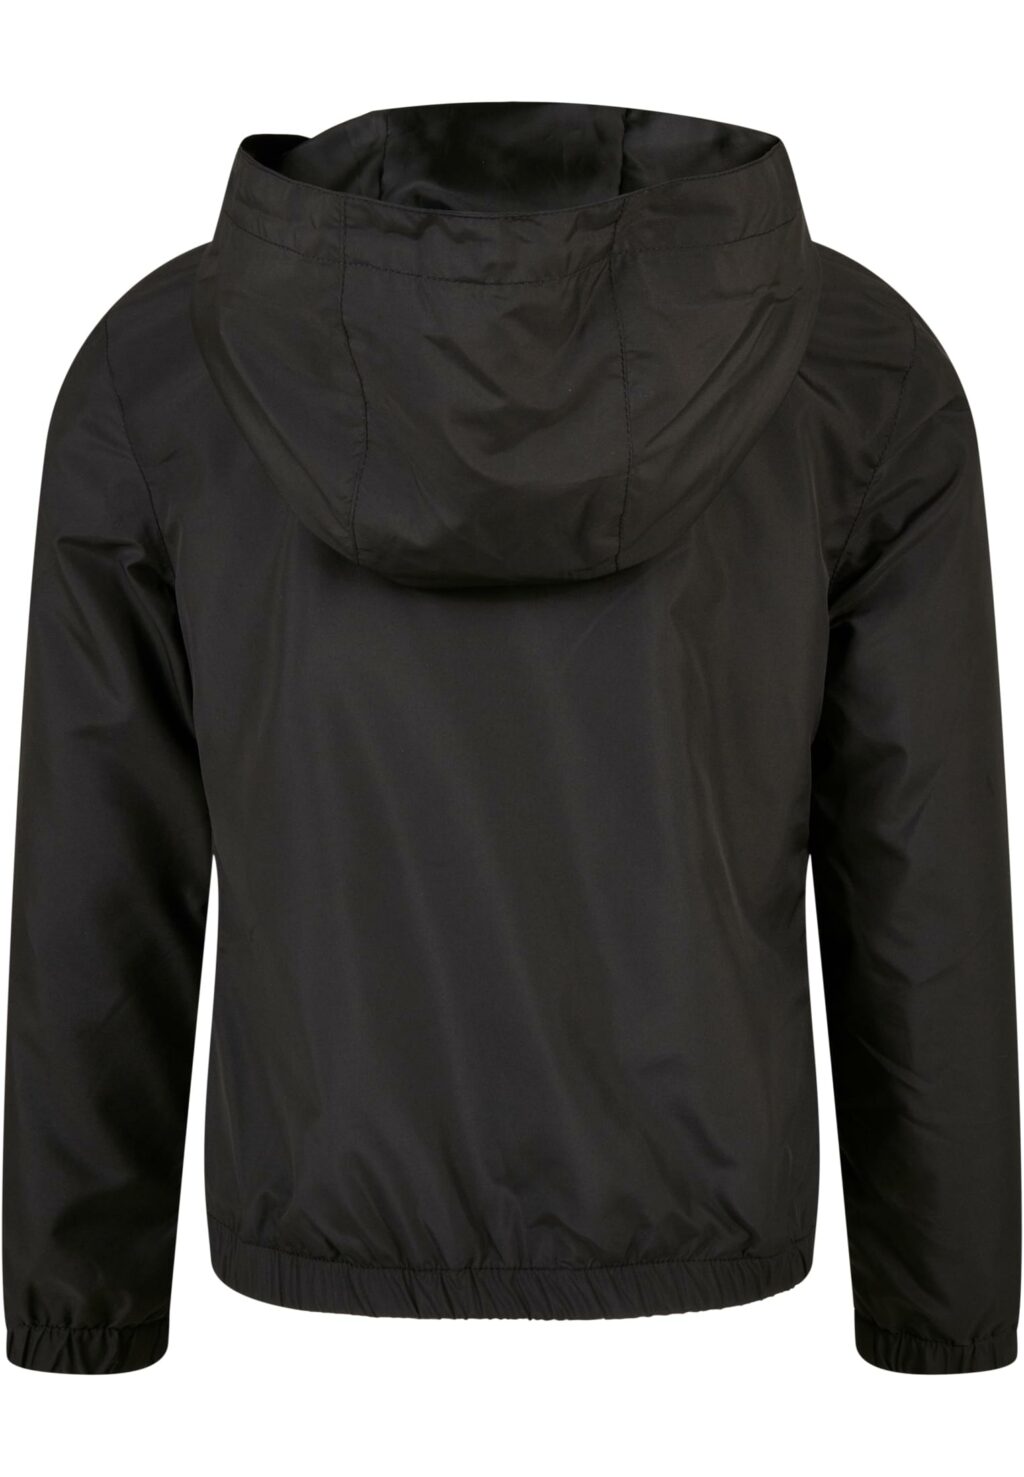 Girls Basic Pullover Jacket black UCK2013